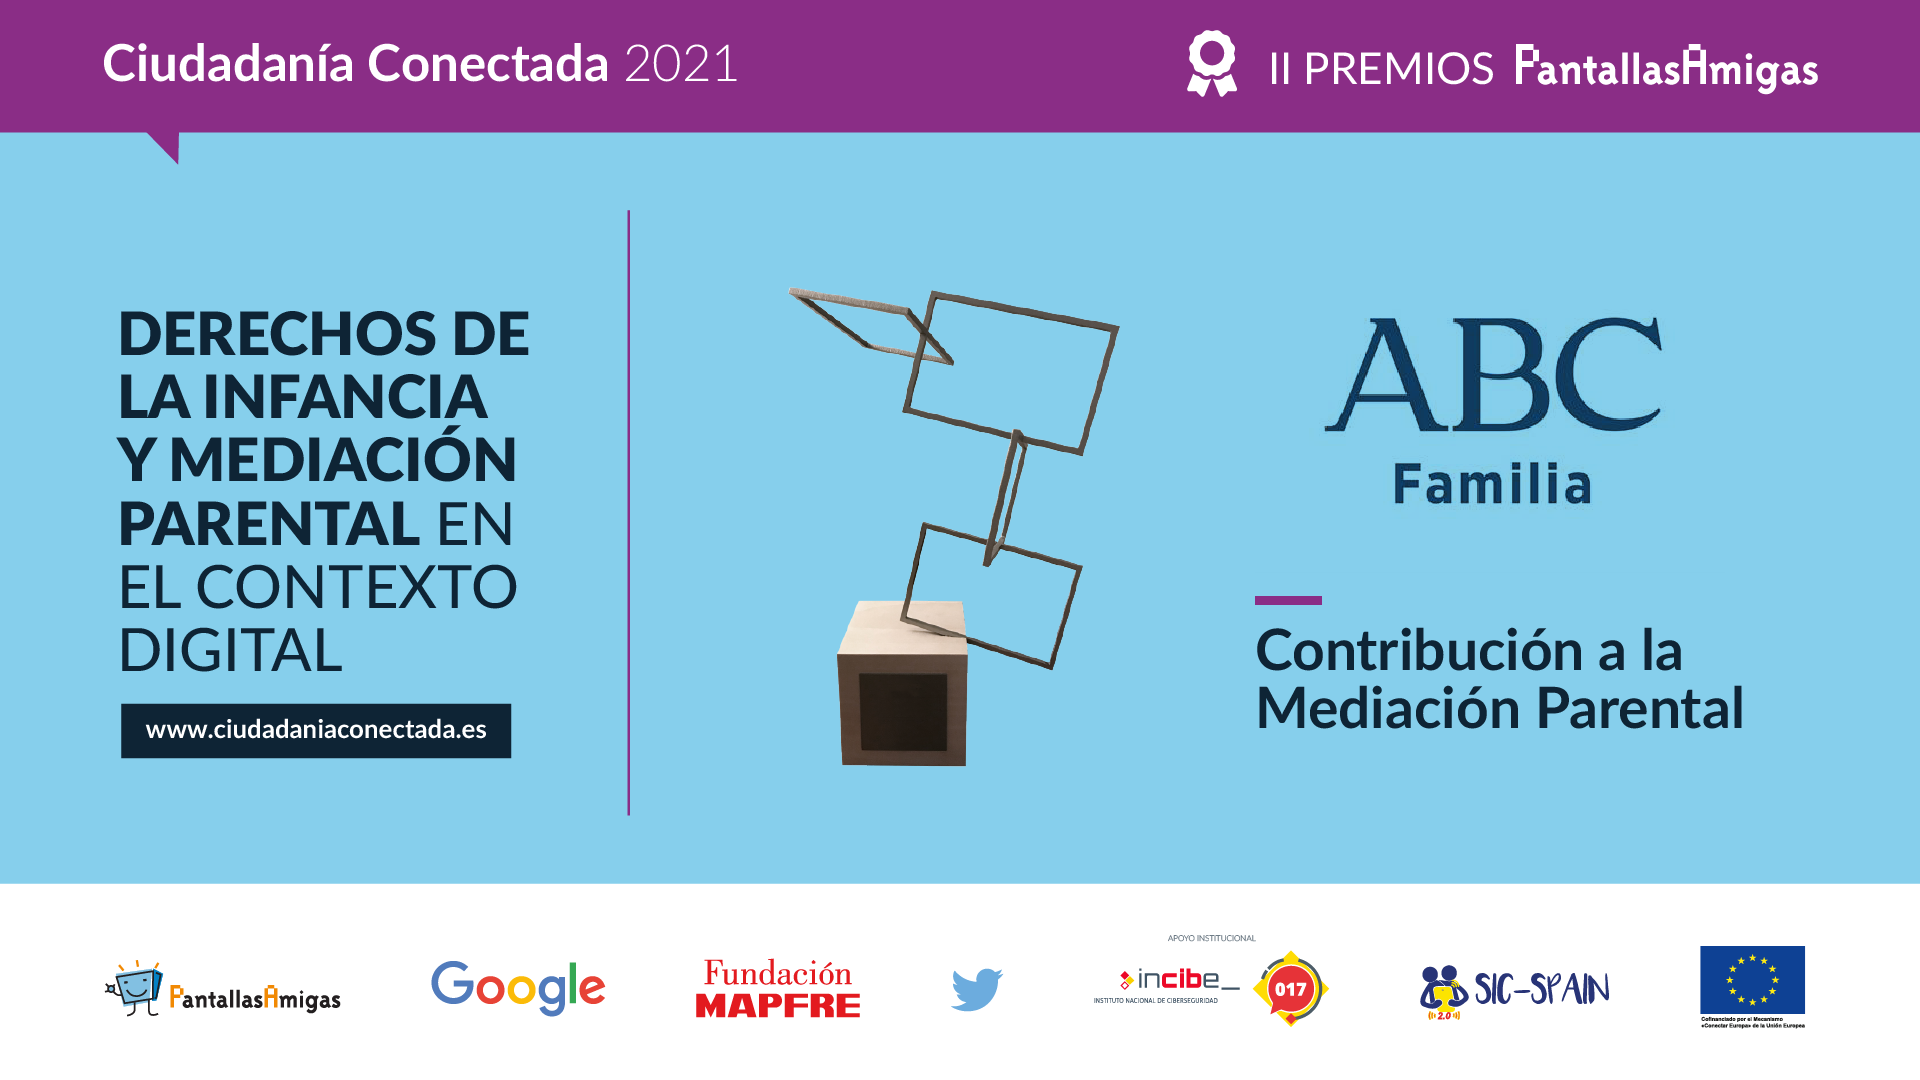 II Premios PantallasAmigas - ABC Familia